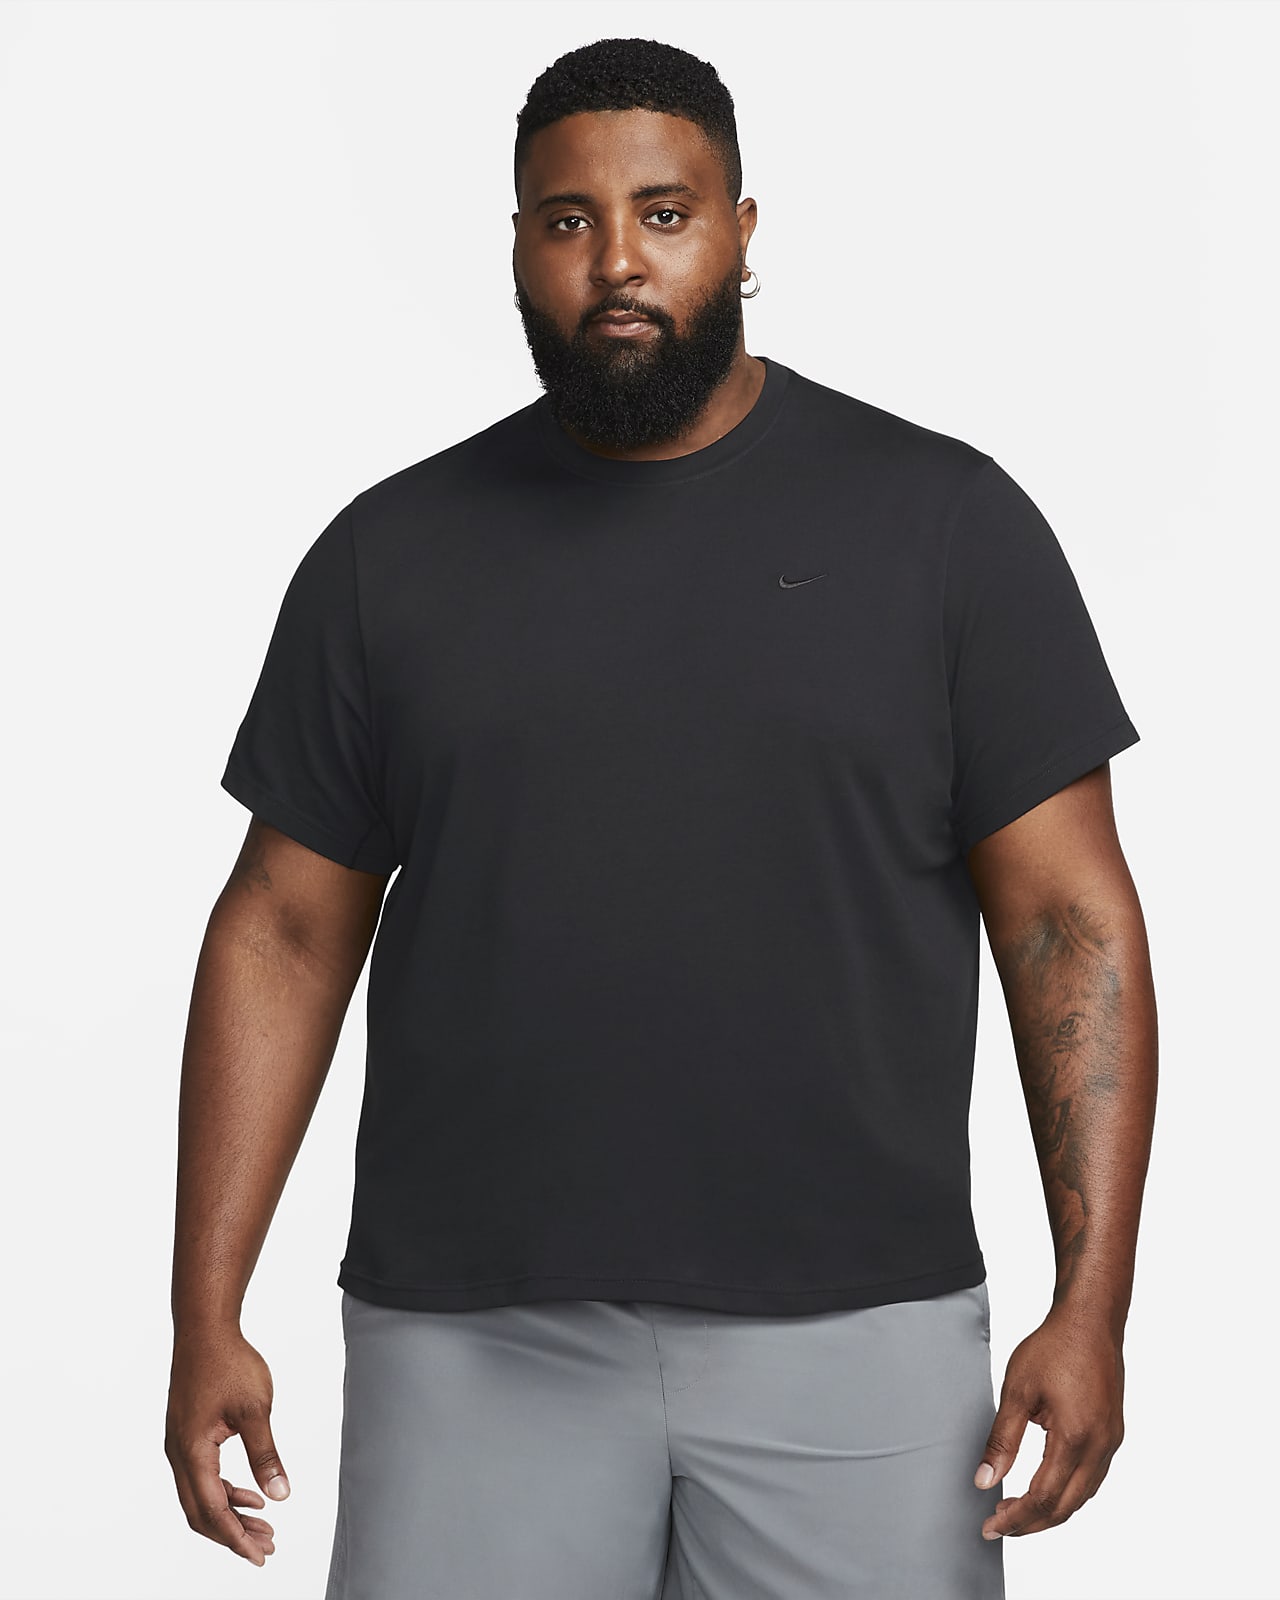 Nike Men's Dri-FIT Primary Short-Sleeve Training T-Shirt, XL, Black